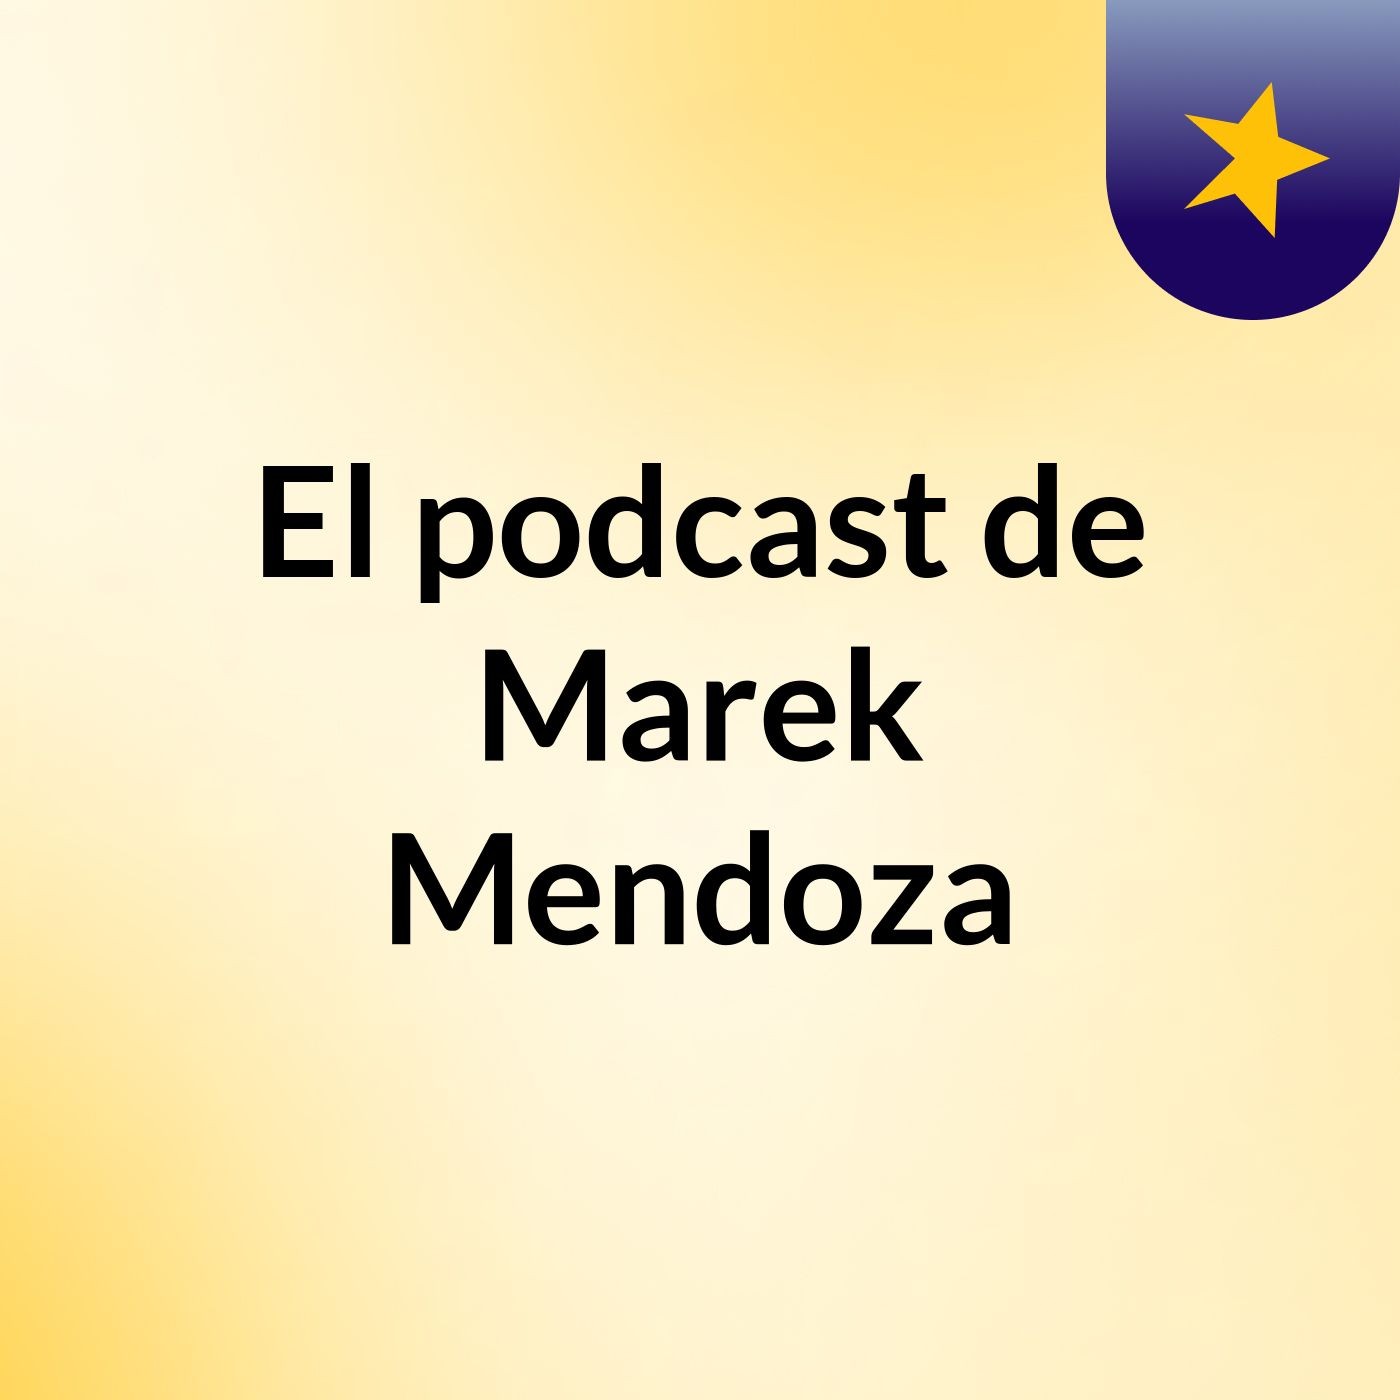 El podcast de Marek Mendoza